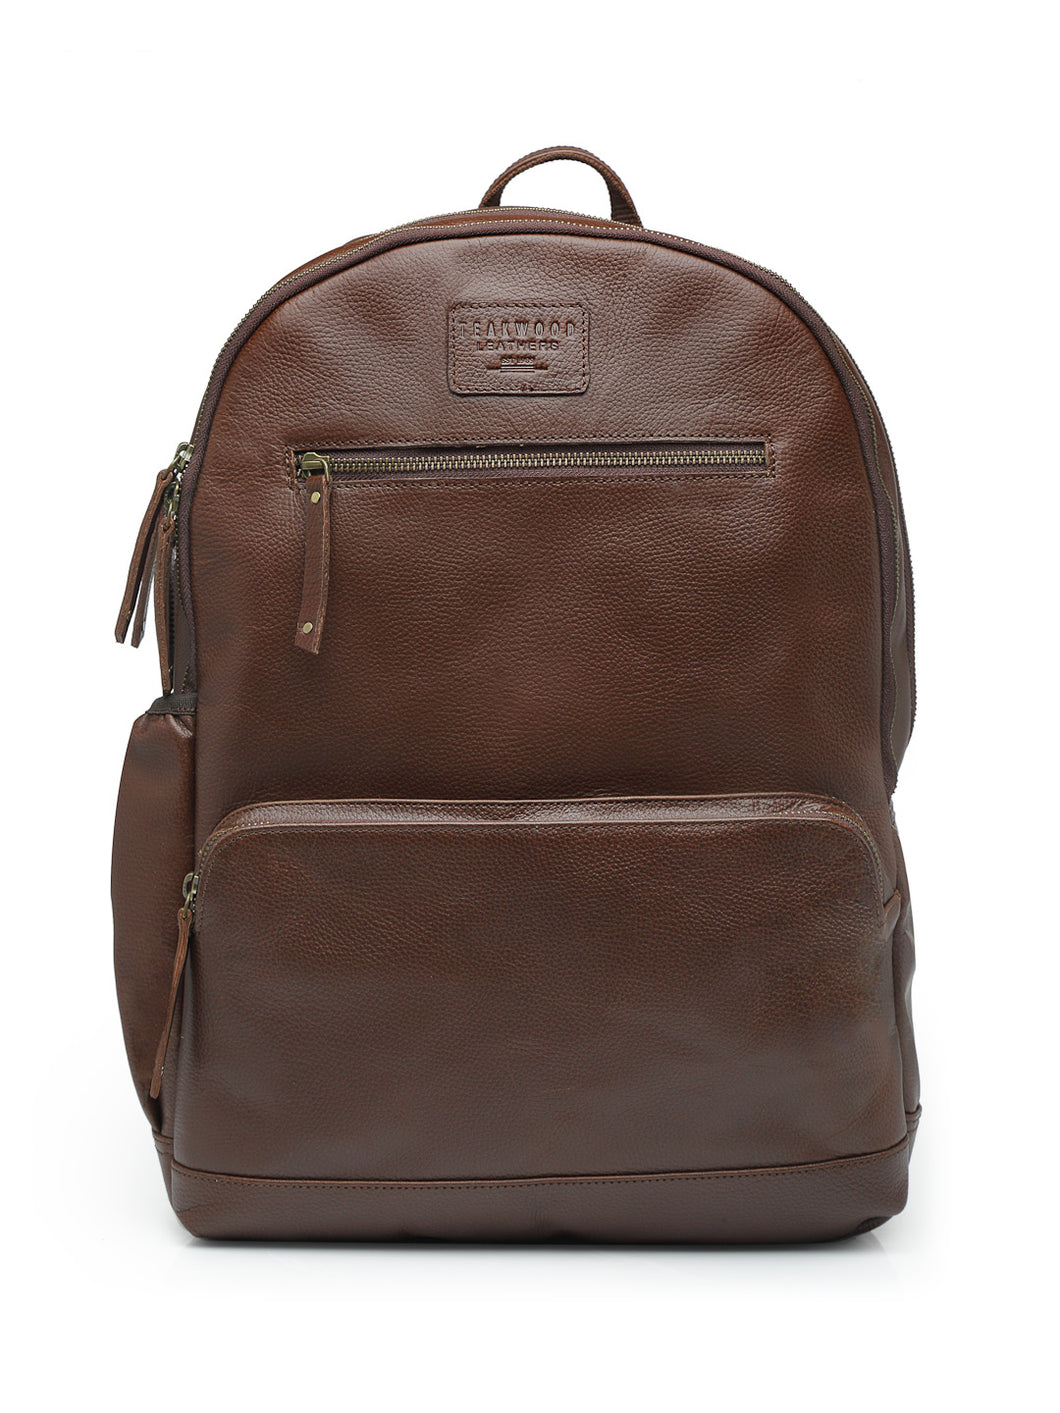 Teakwood Unisex Genuine Leather Brown Solid Backpack||Unisex Laptop Bag/Backpack